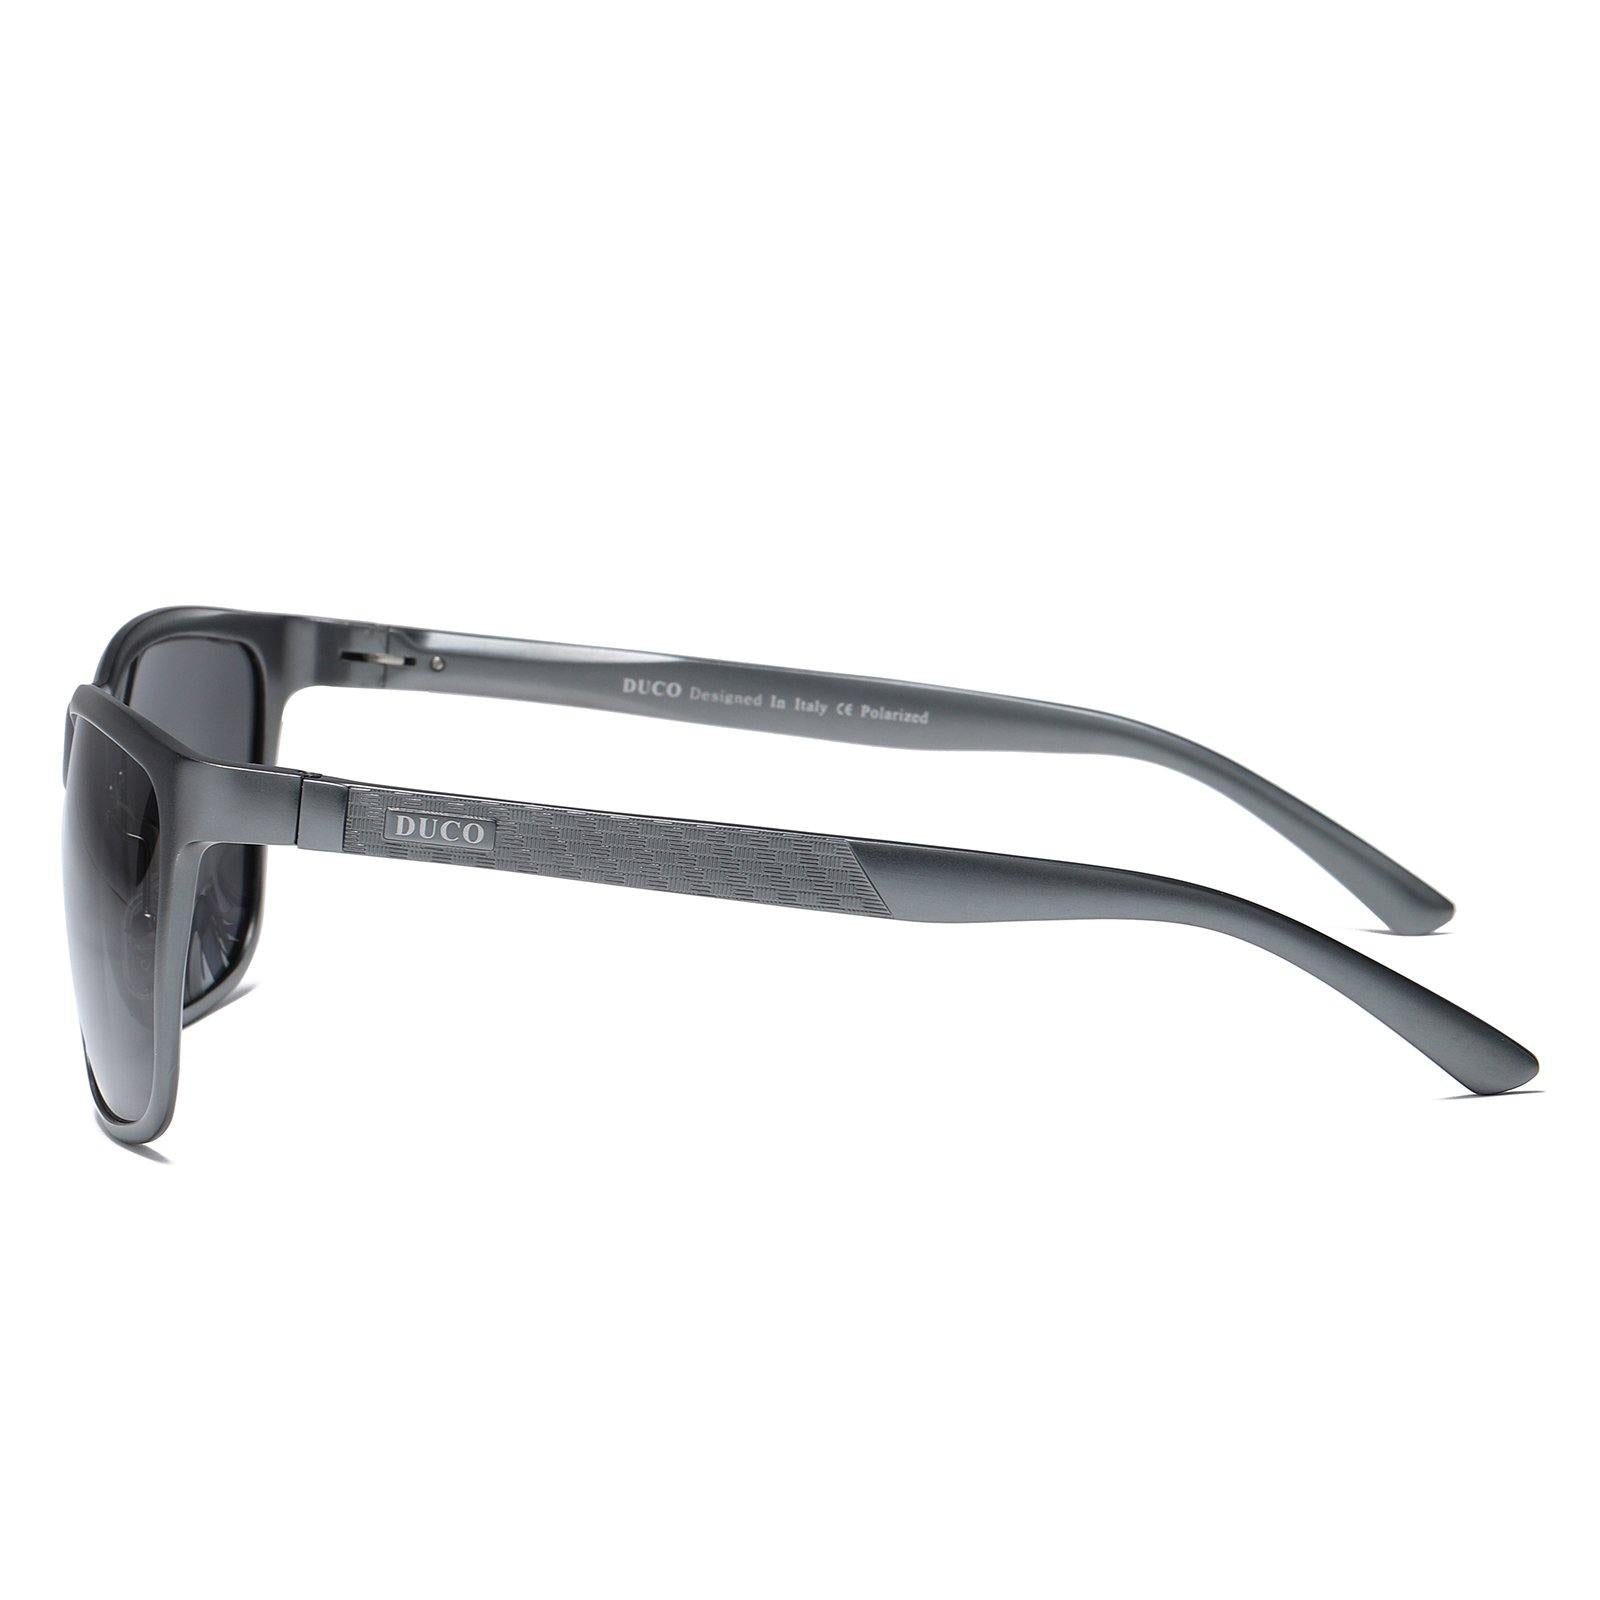 DUCO Mens Sports Polarized Al-Mg Metal Frame Sunglasses UV Protection Sunglasses for Men 8200 